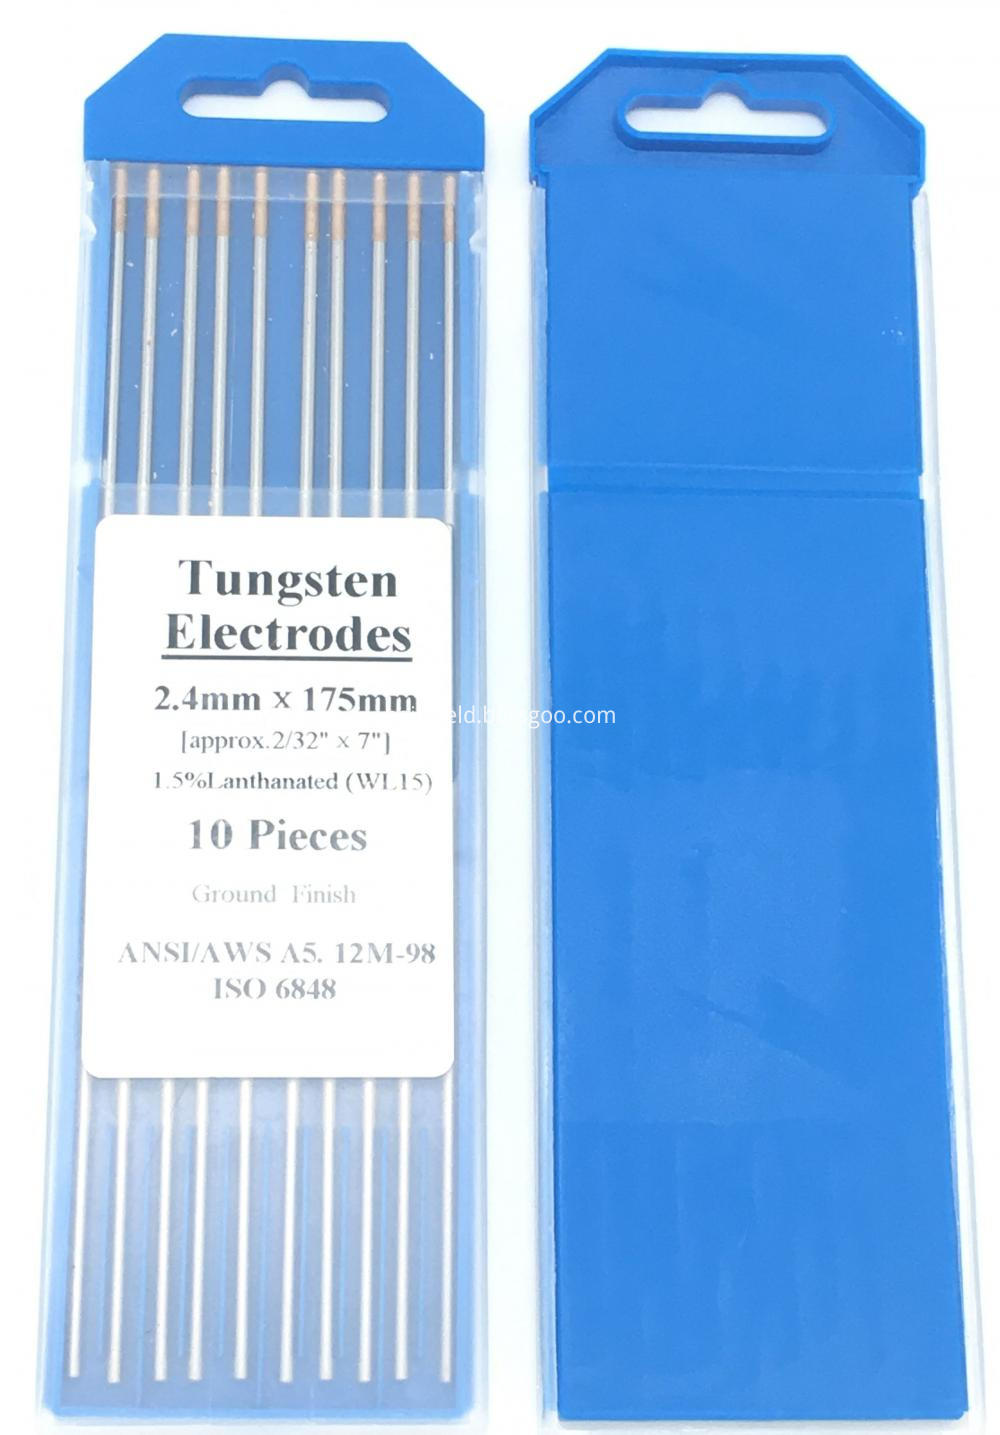 Lanthan Preis Tungsten Electrode